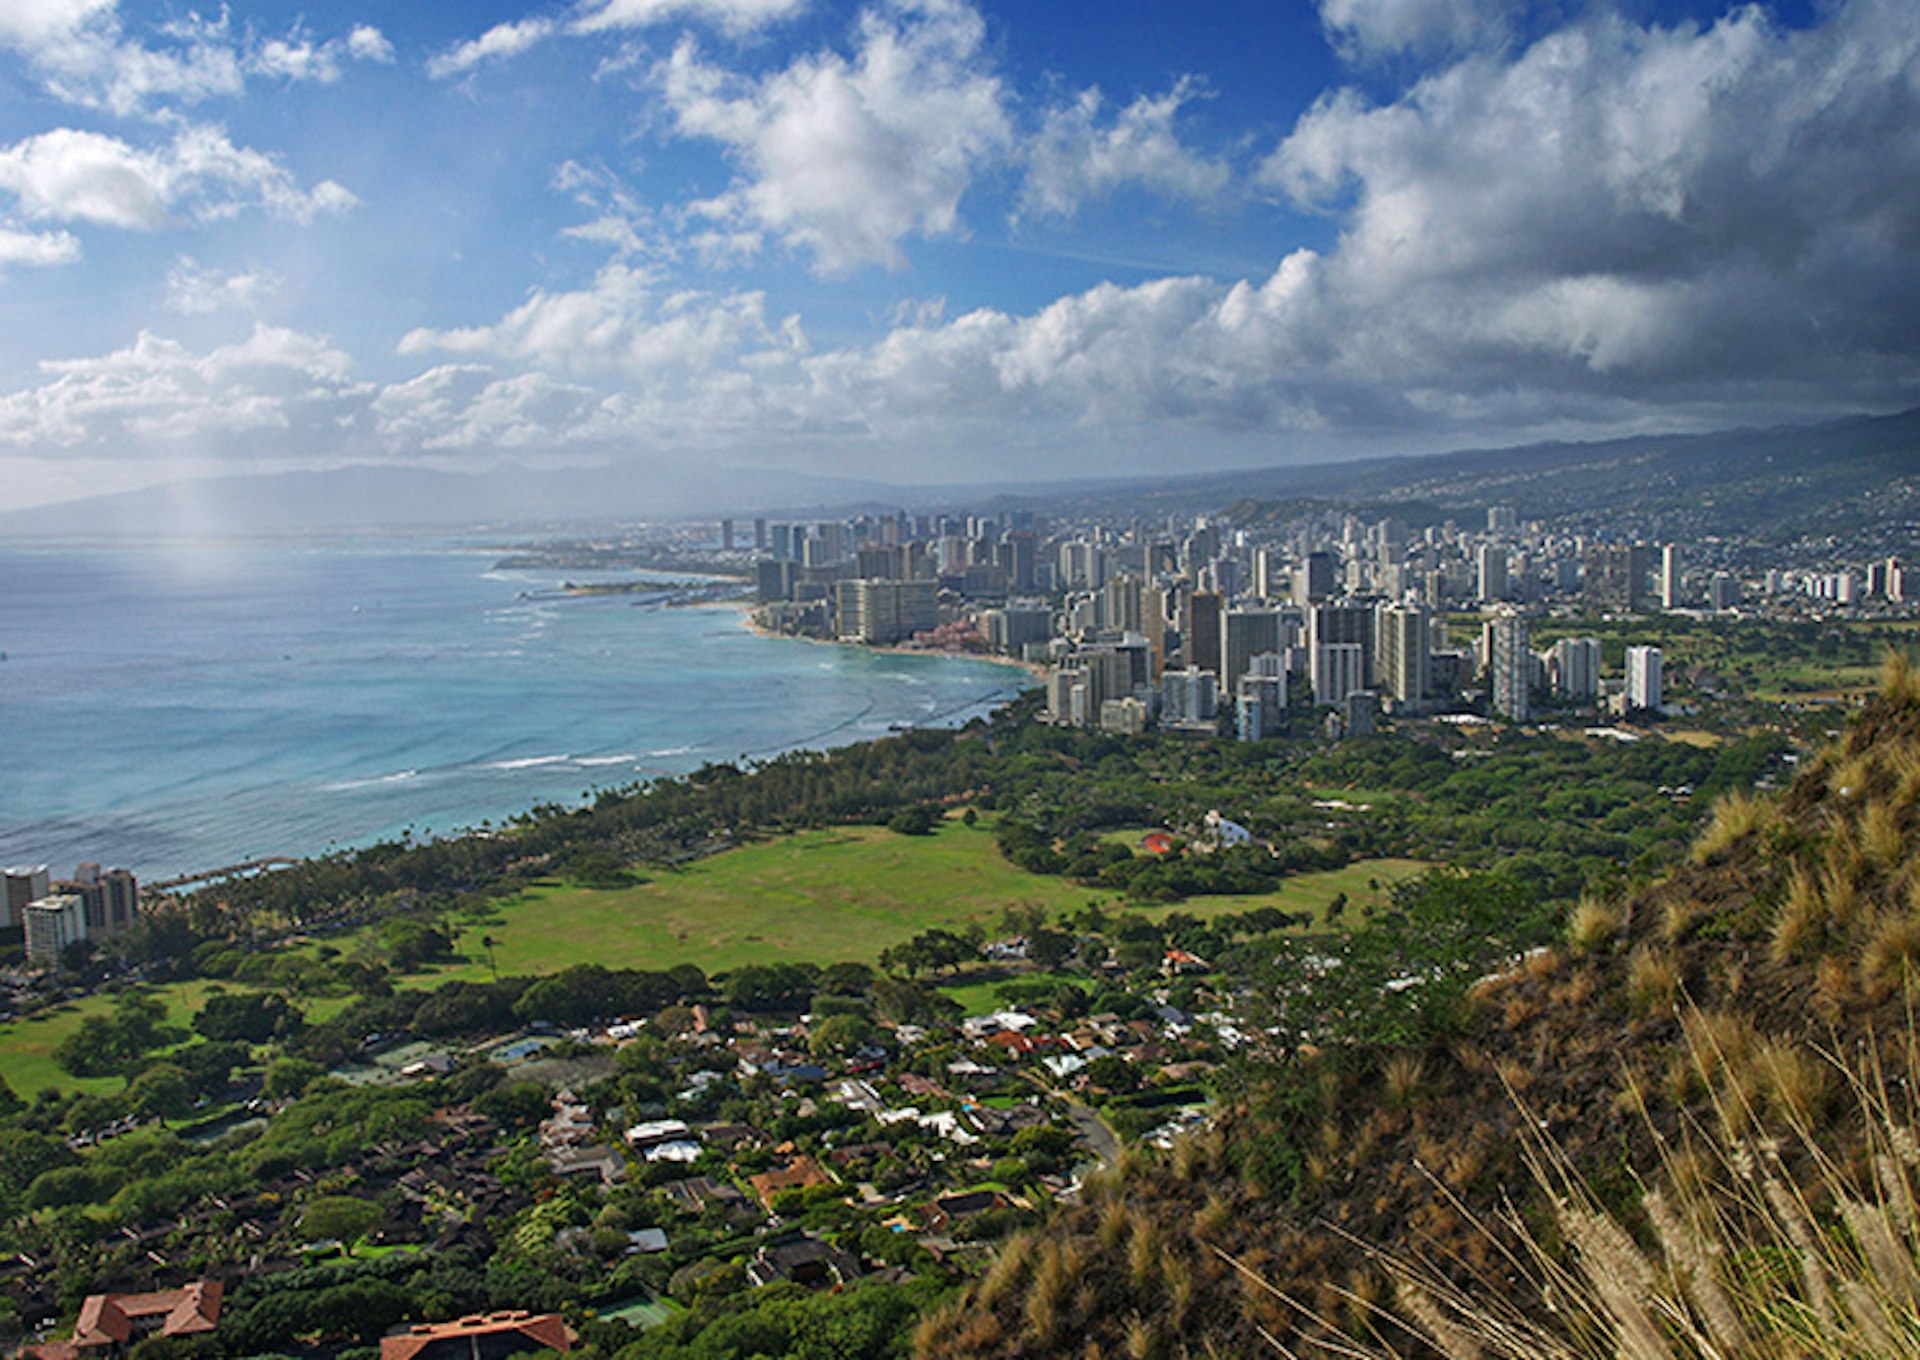 Honolulu and Waikiki from Diamond Head on O'ahu. Image by Ignacio Palacios/Getty Images.